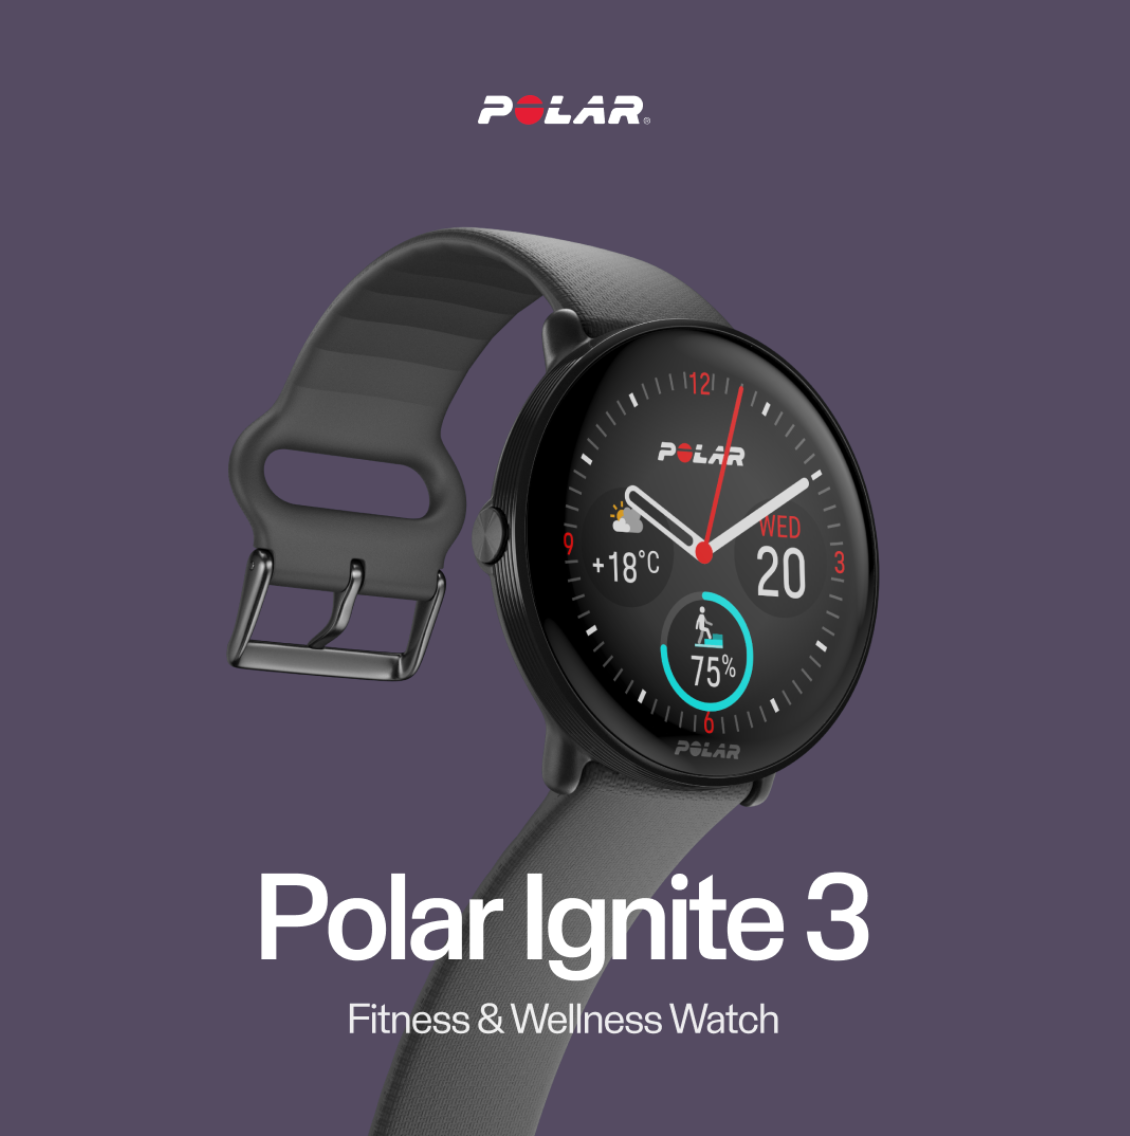 Polar Ignite 3 Titanium tracks your sleep, activity, and heart rate